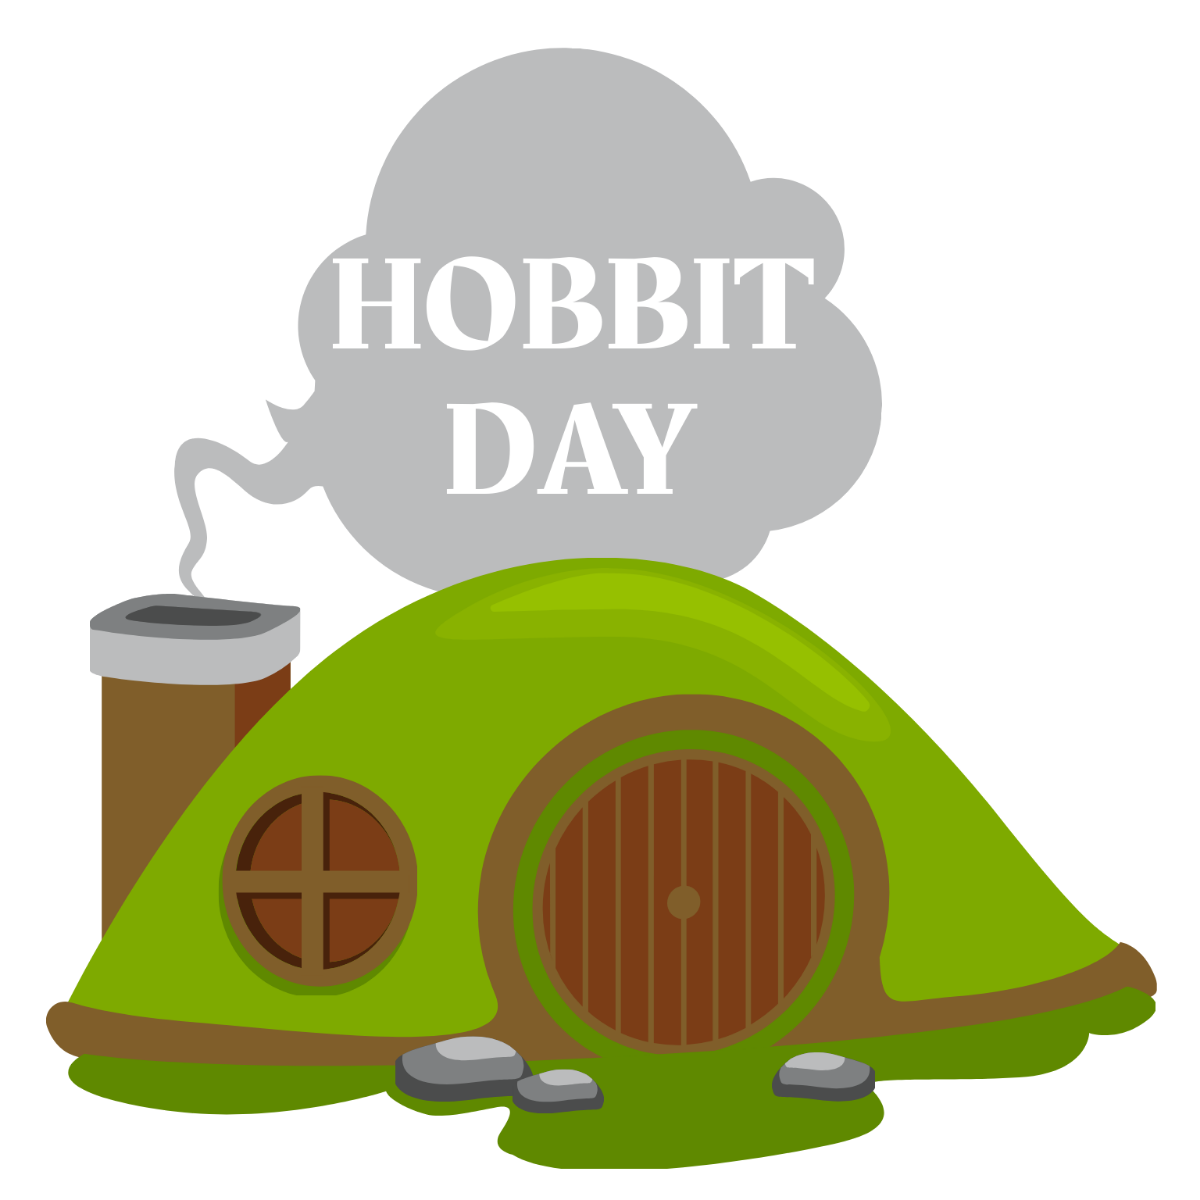 Hobbit Day Illustration Template